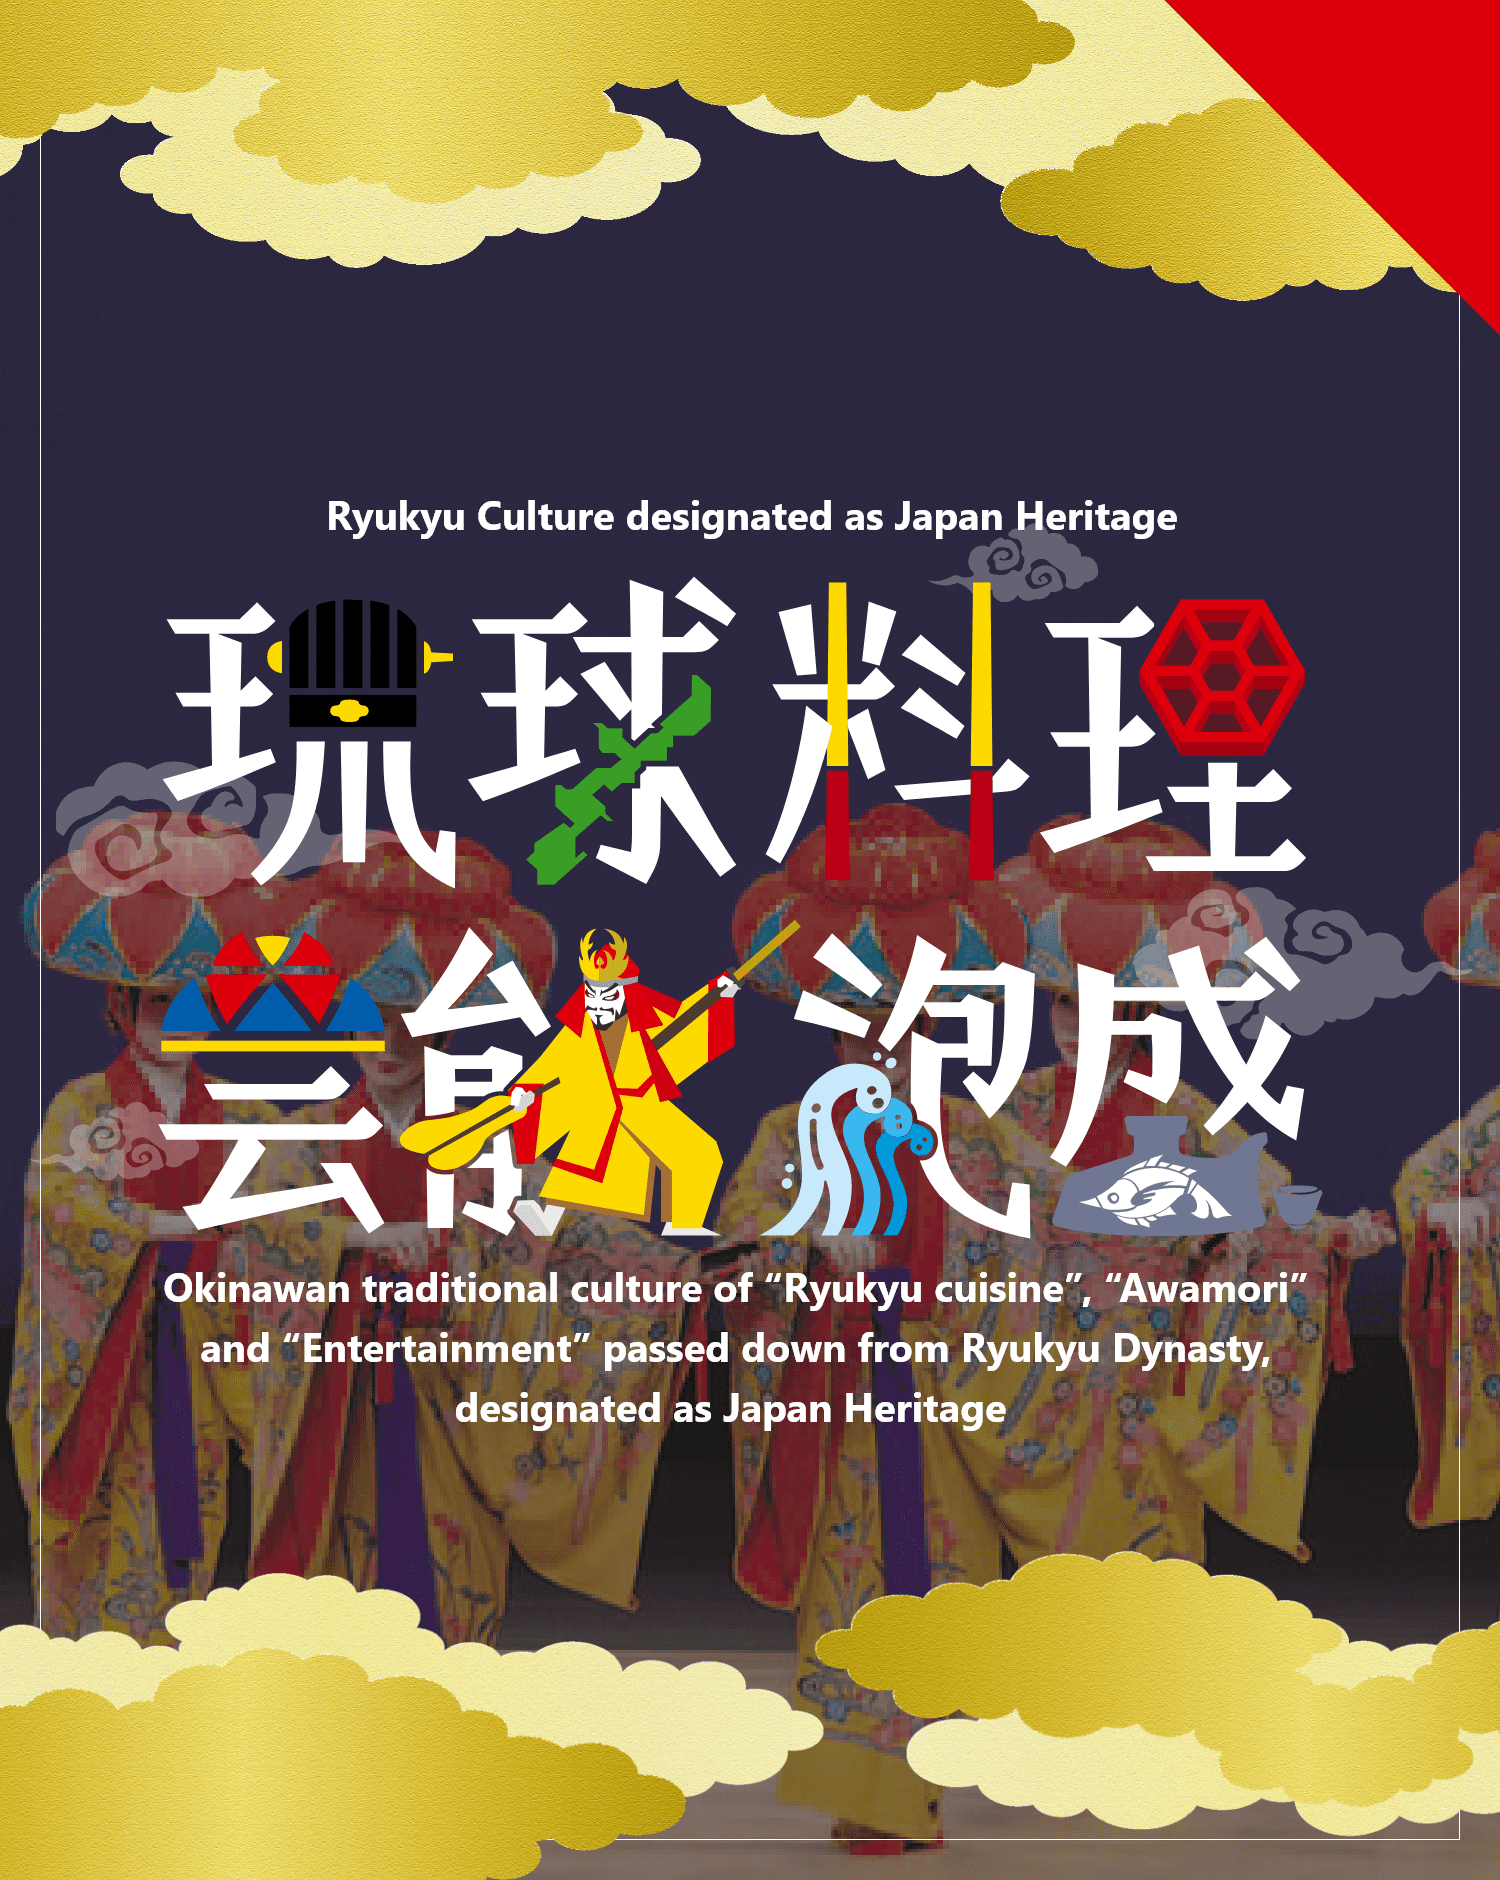 Ryukyu Culture designated as Japan Heritage